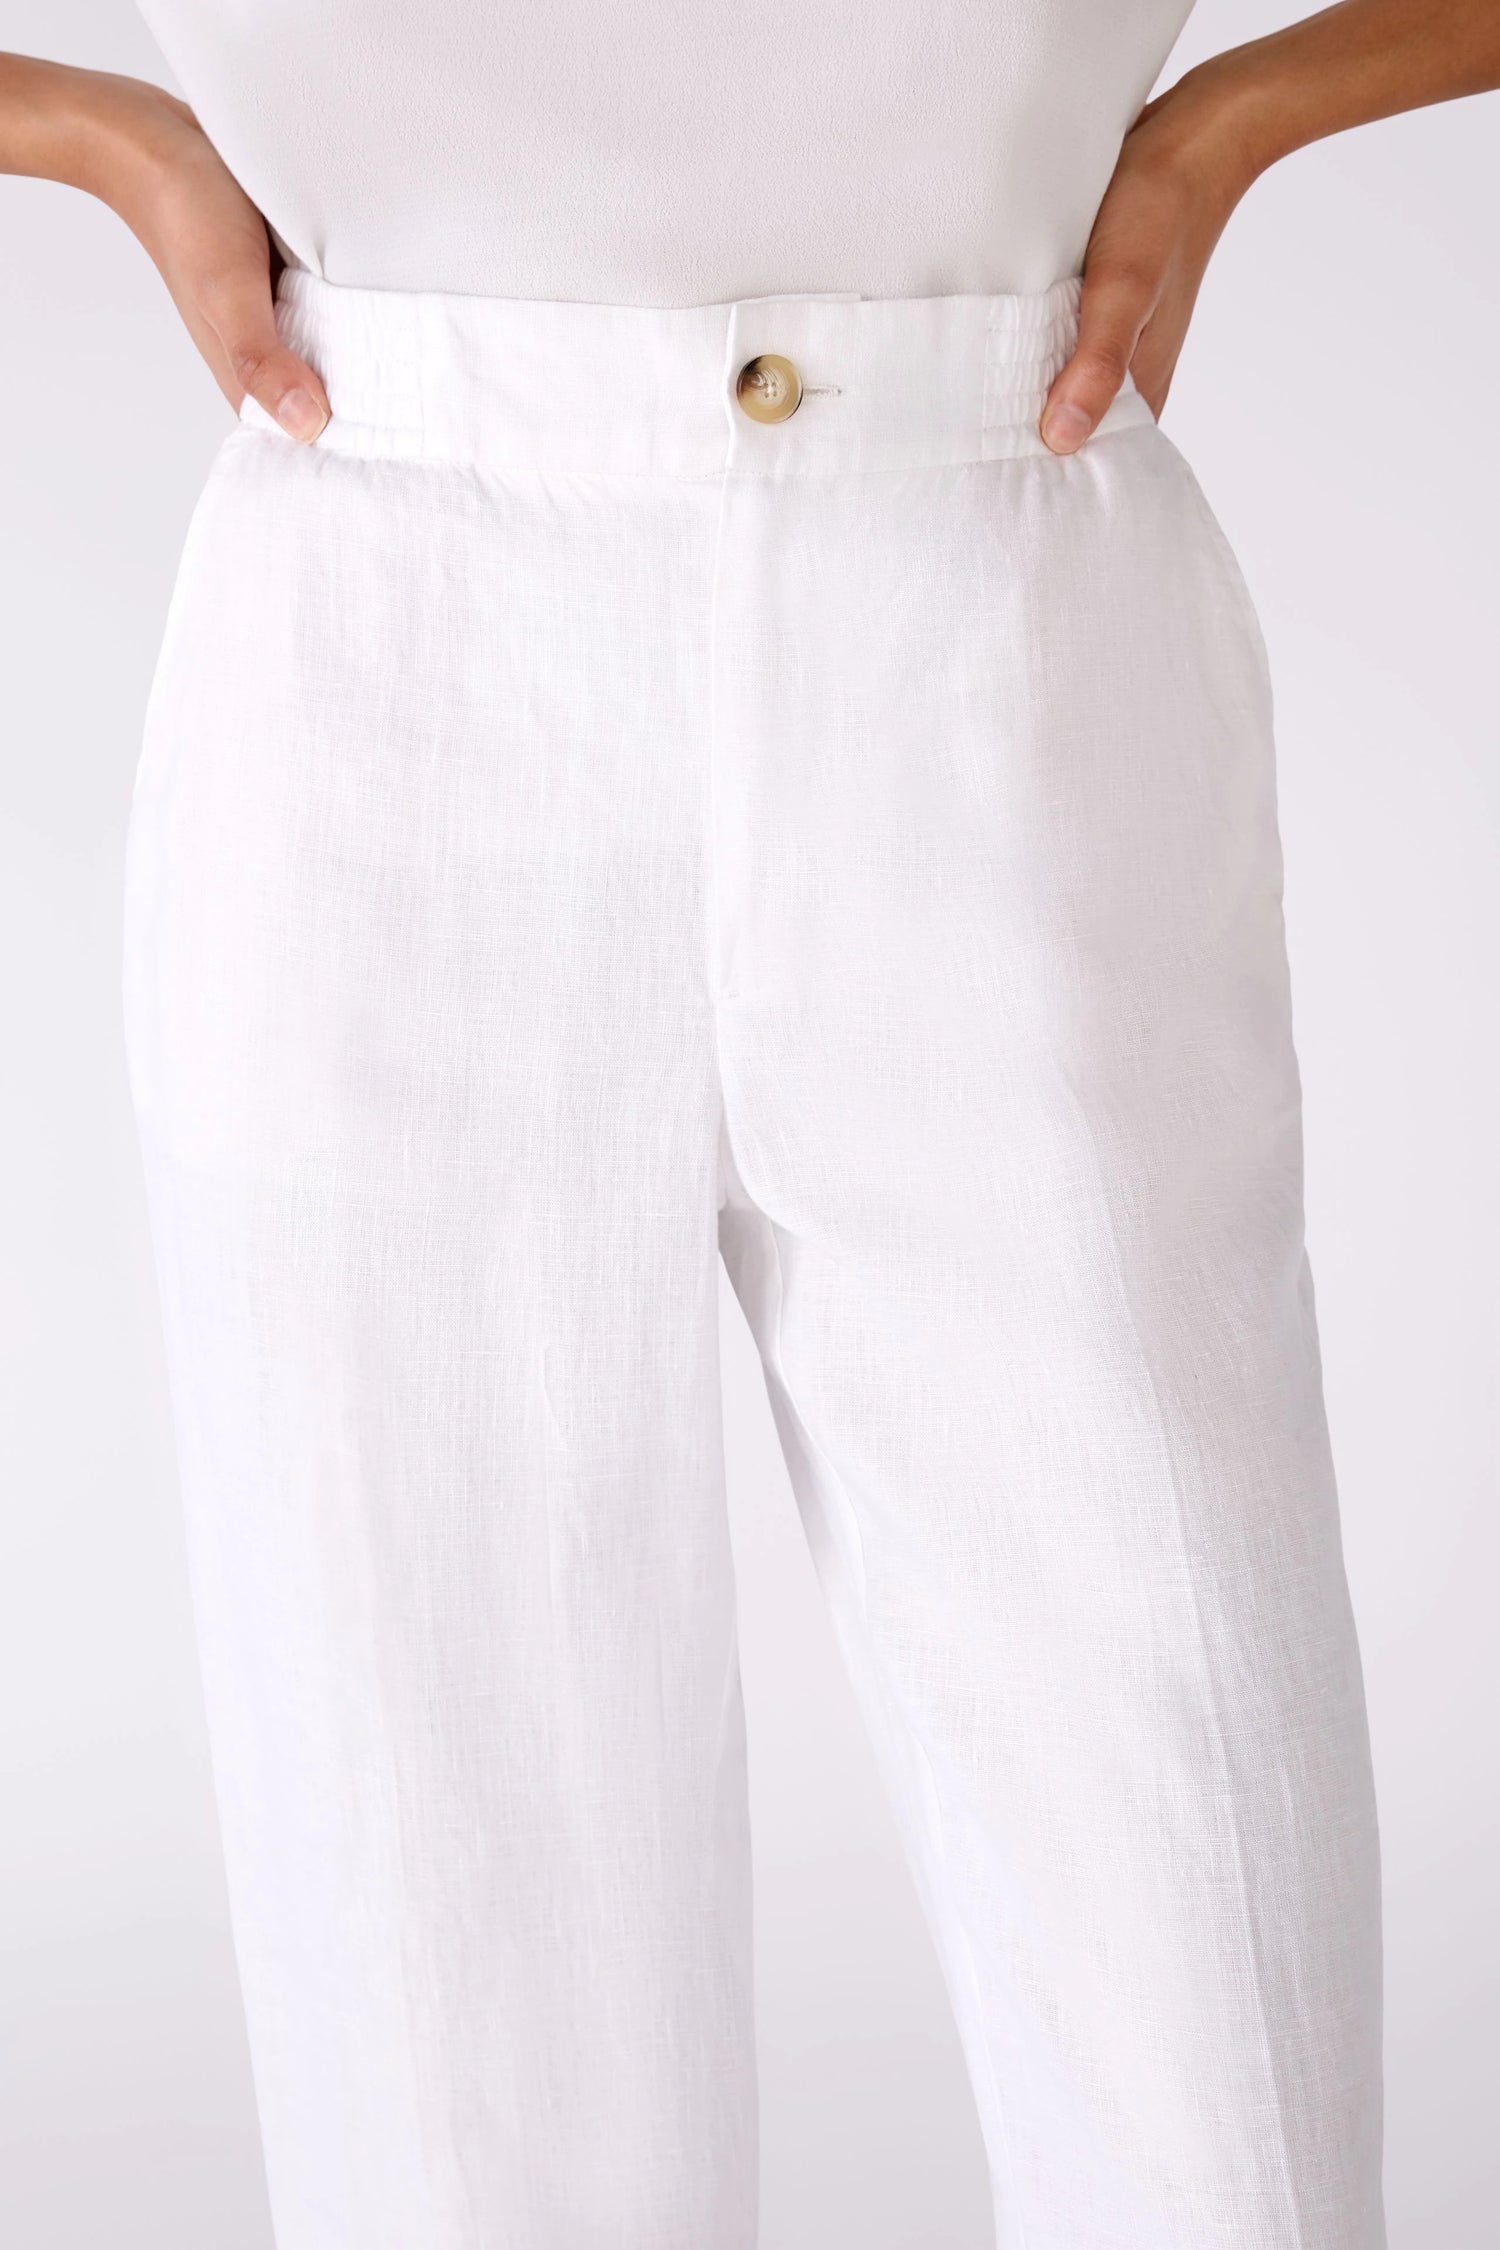 Linen Pants Cropped Length